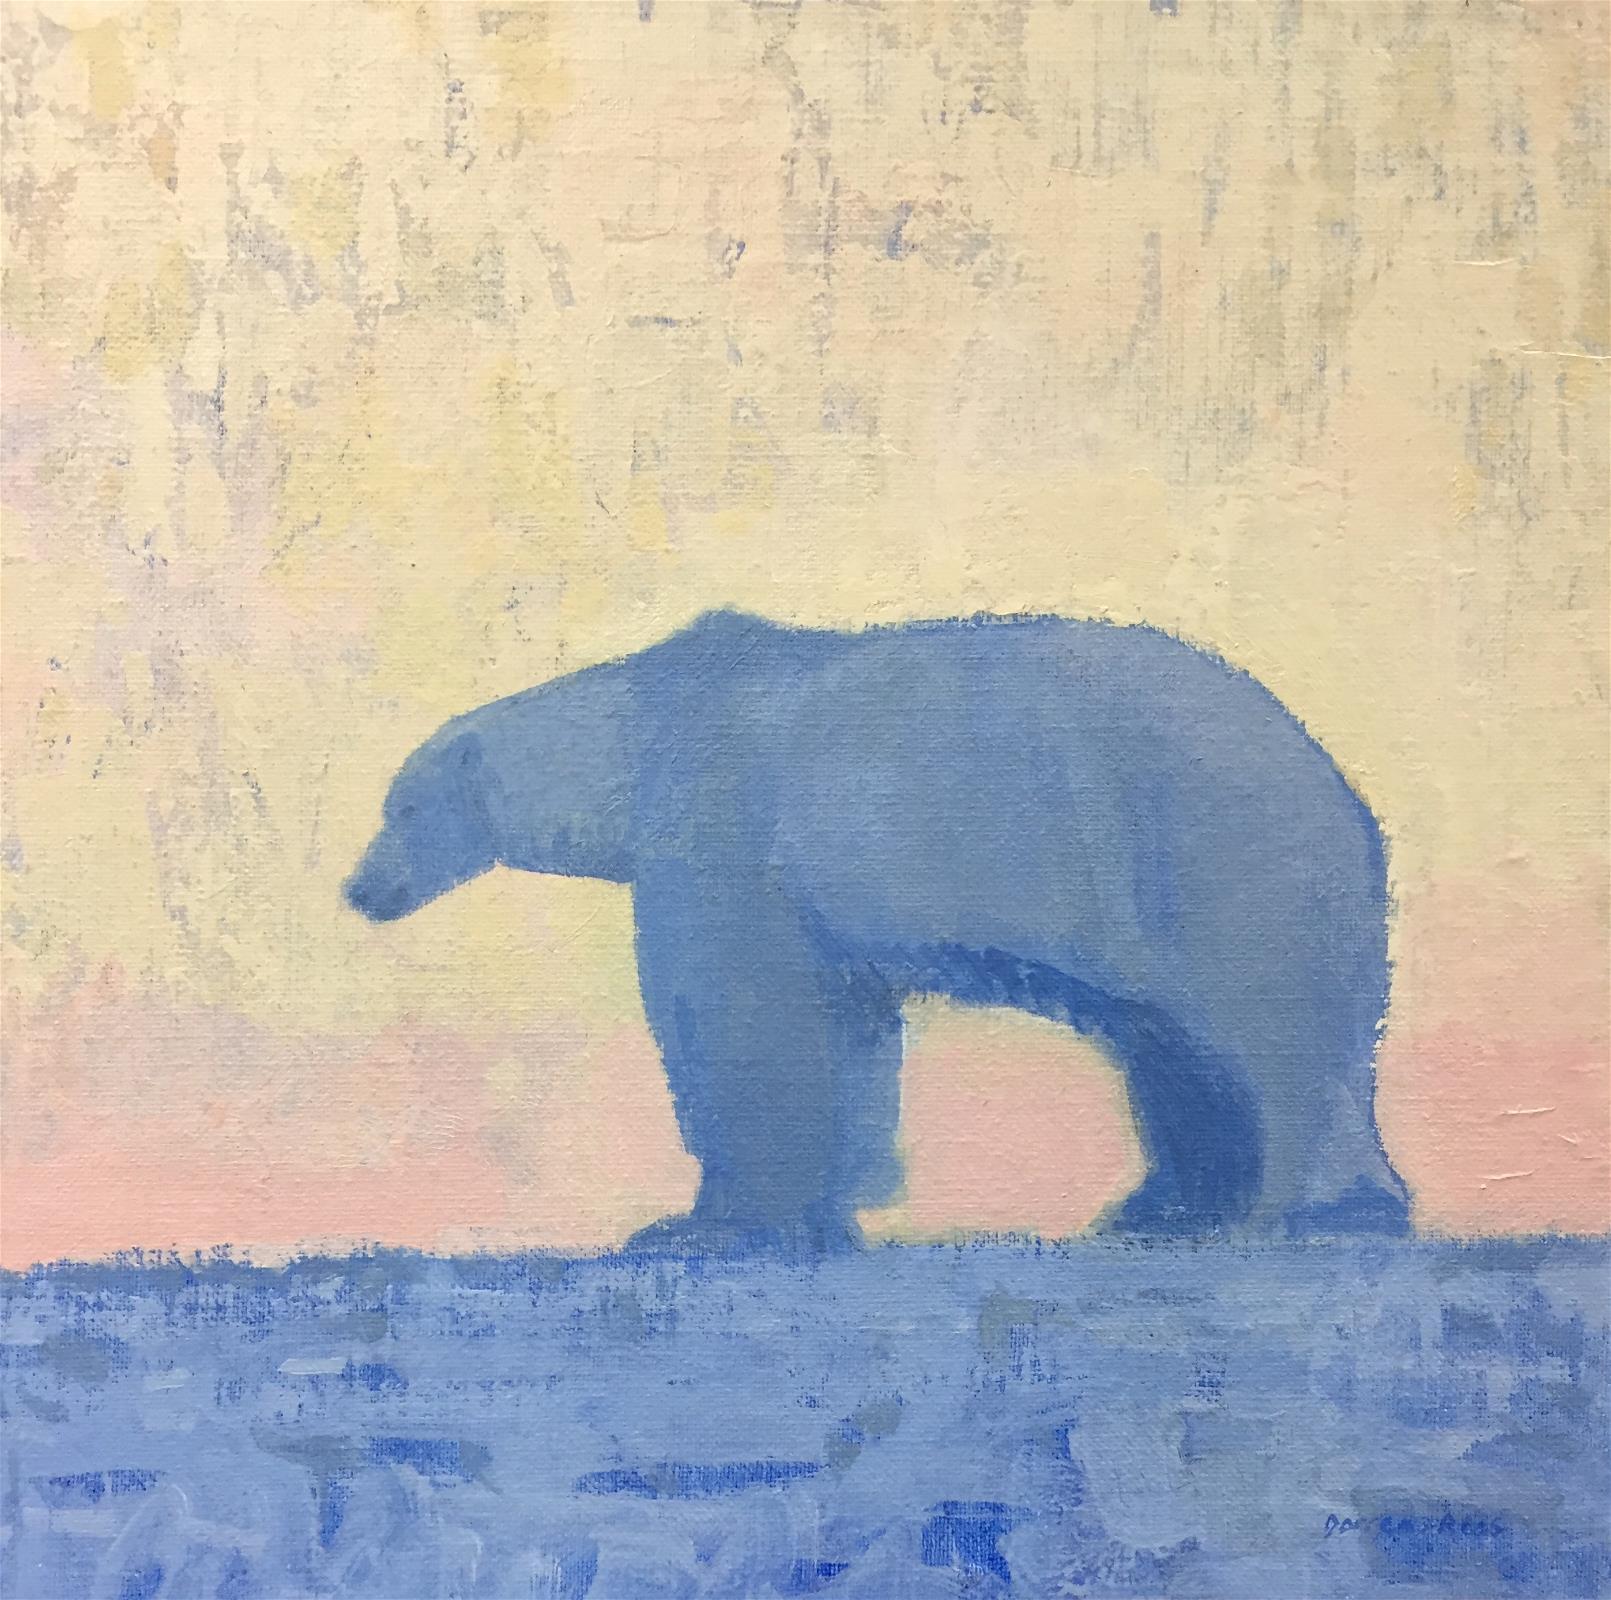 <p>Blue bear by Darren Rees</p>